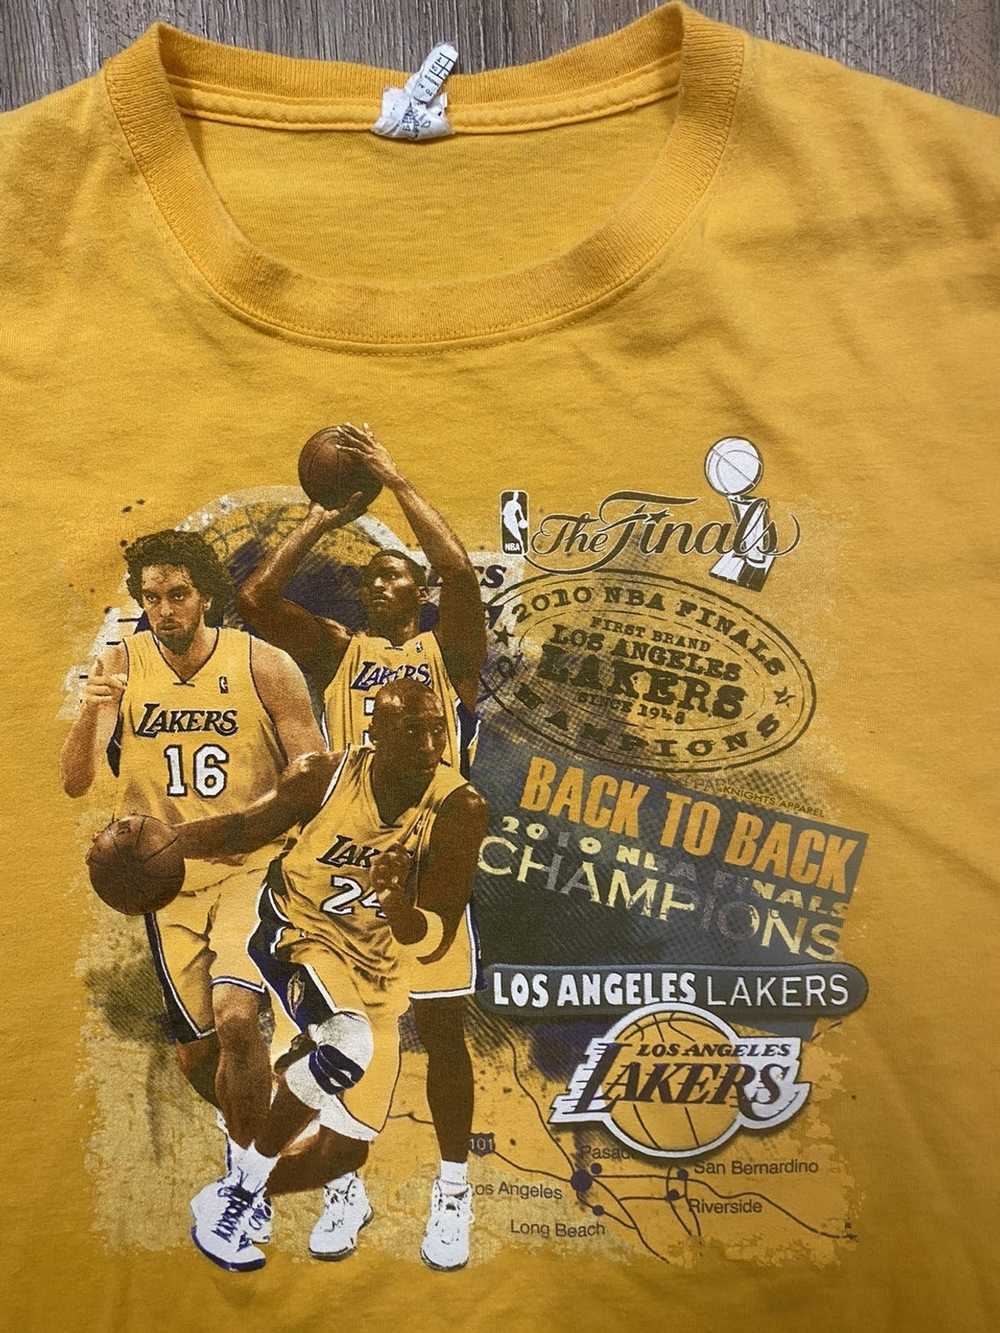 L.A. Lakers × Vintage Lakers 2010 championship - image 2